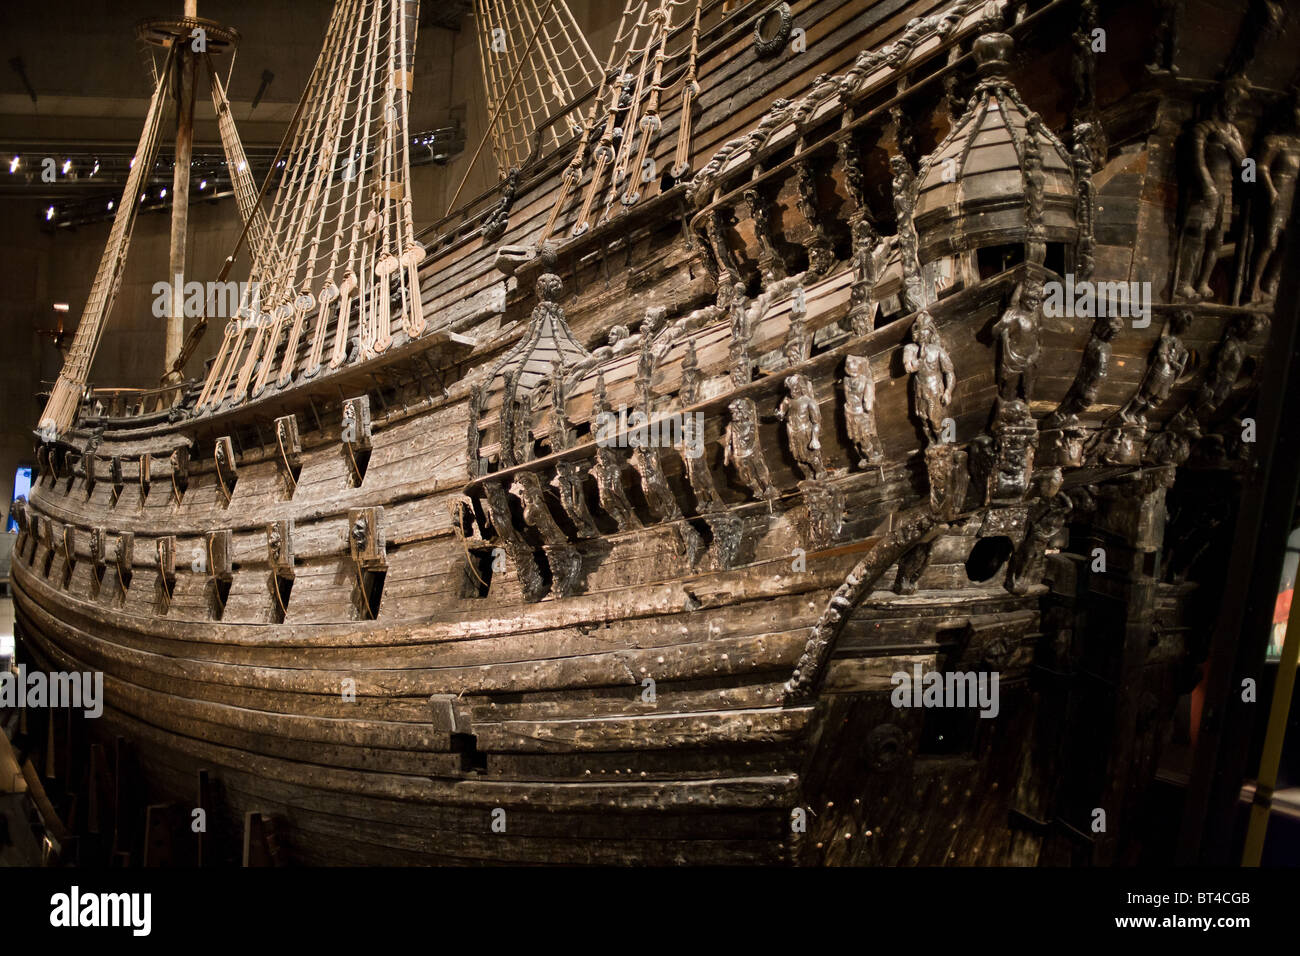 Salvaged 17th century sunk Vasa ship on display at Vasa Museum in Stockholm Stock Photo